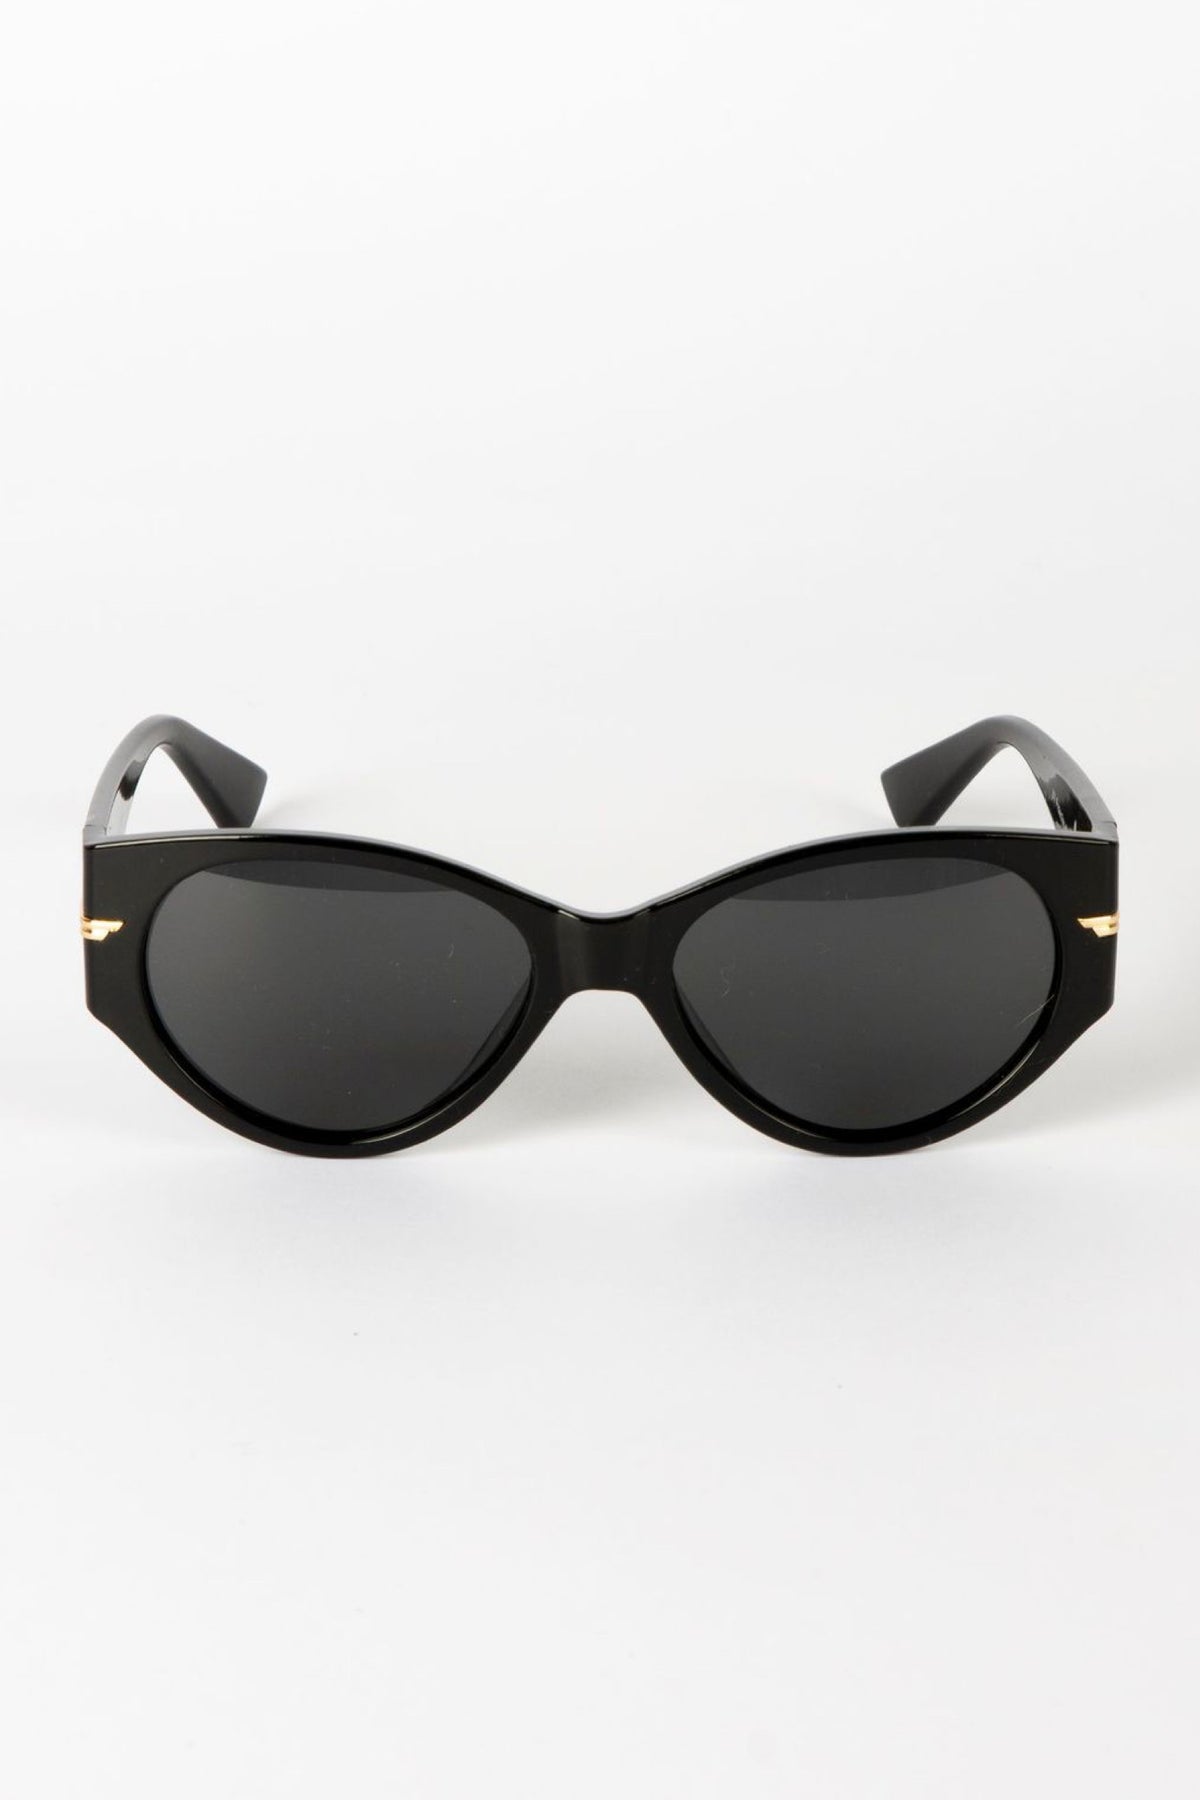 Calypso Sunglasses Black